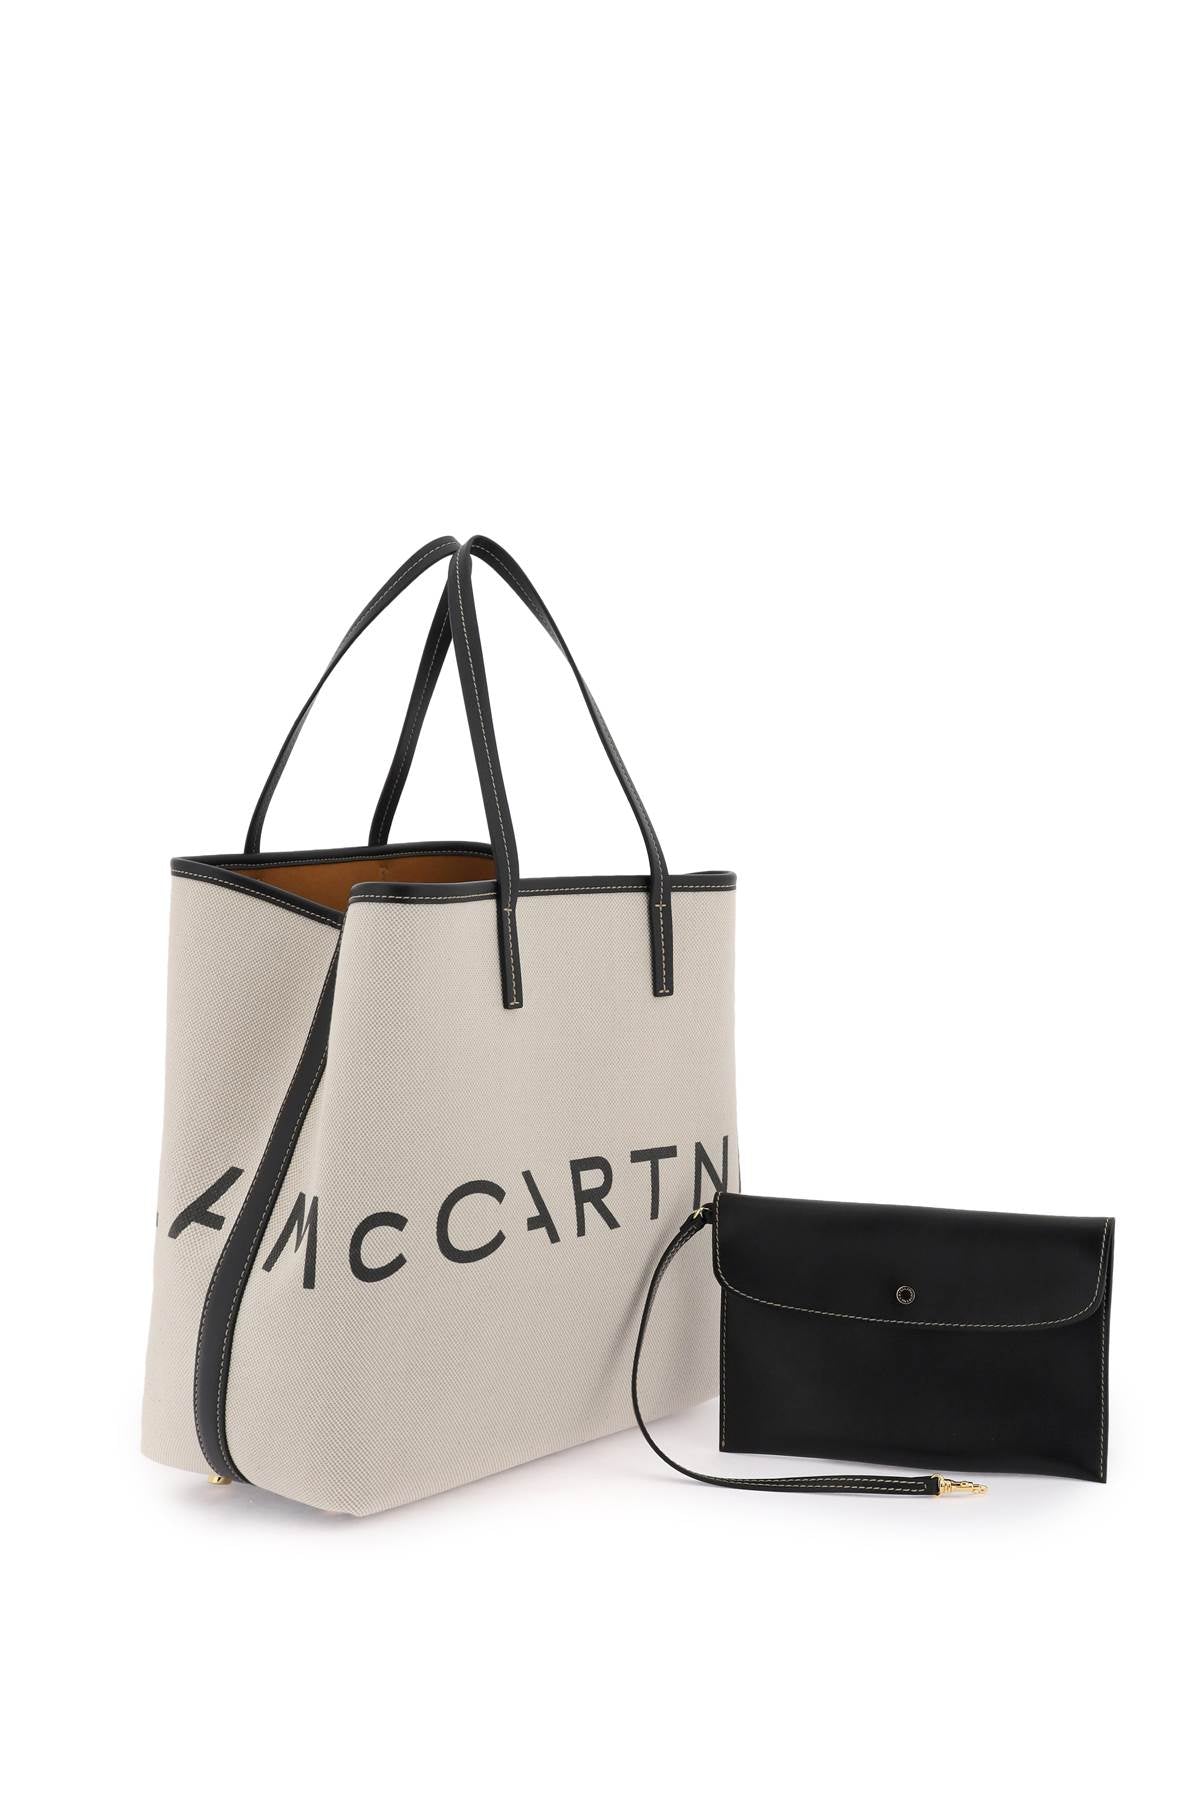 STELLA MCCARTNEY Beige Canvas Tote Handbag for Women